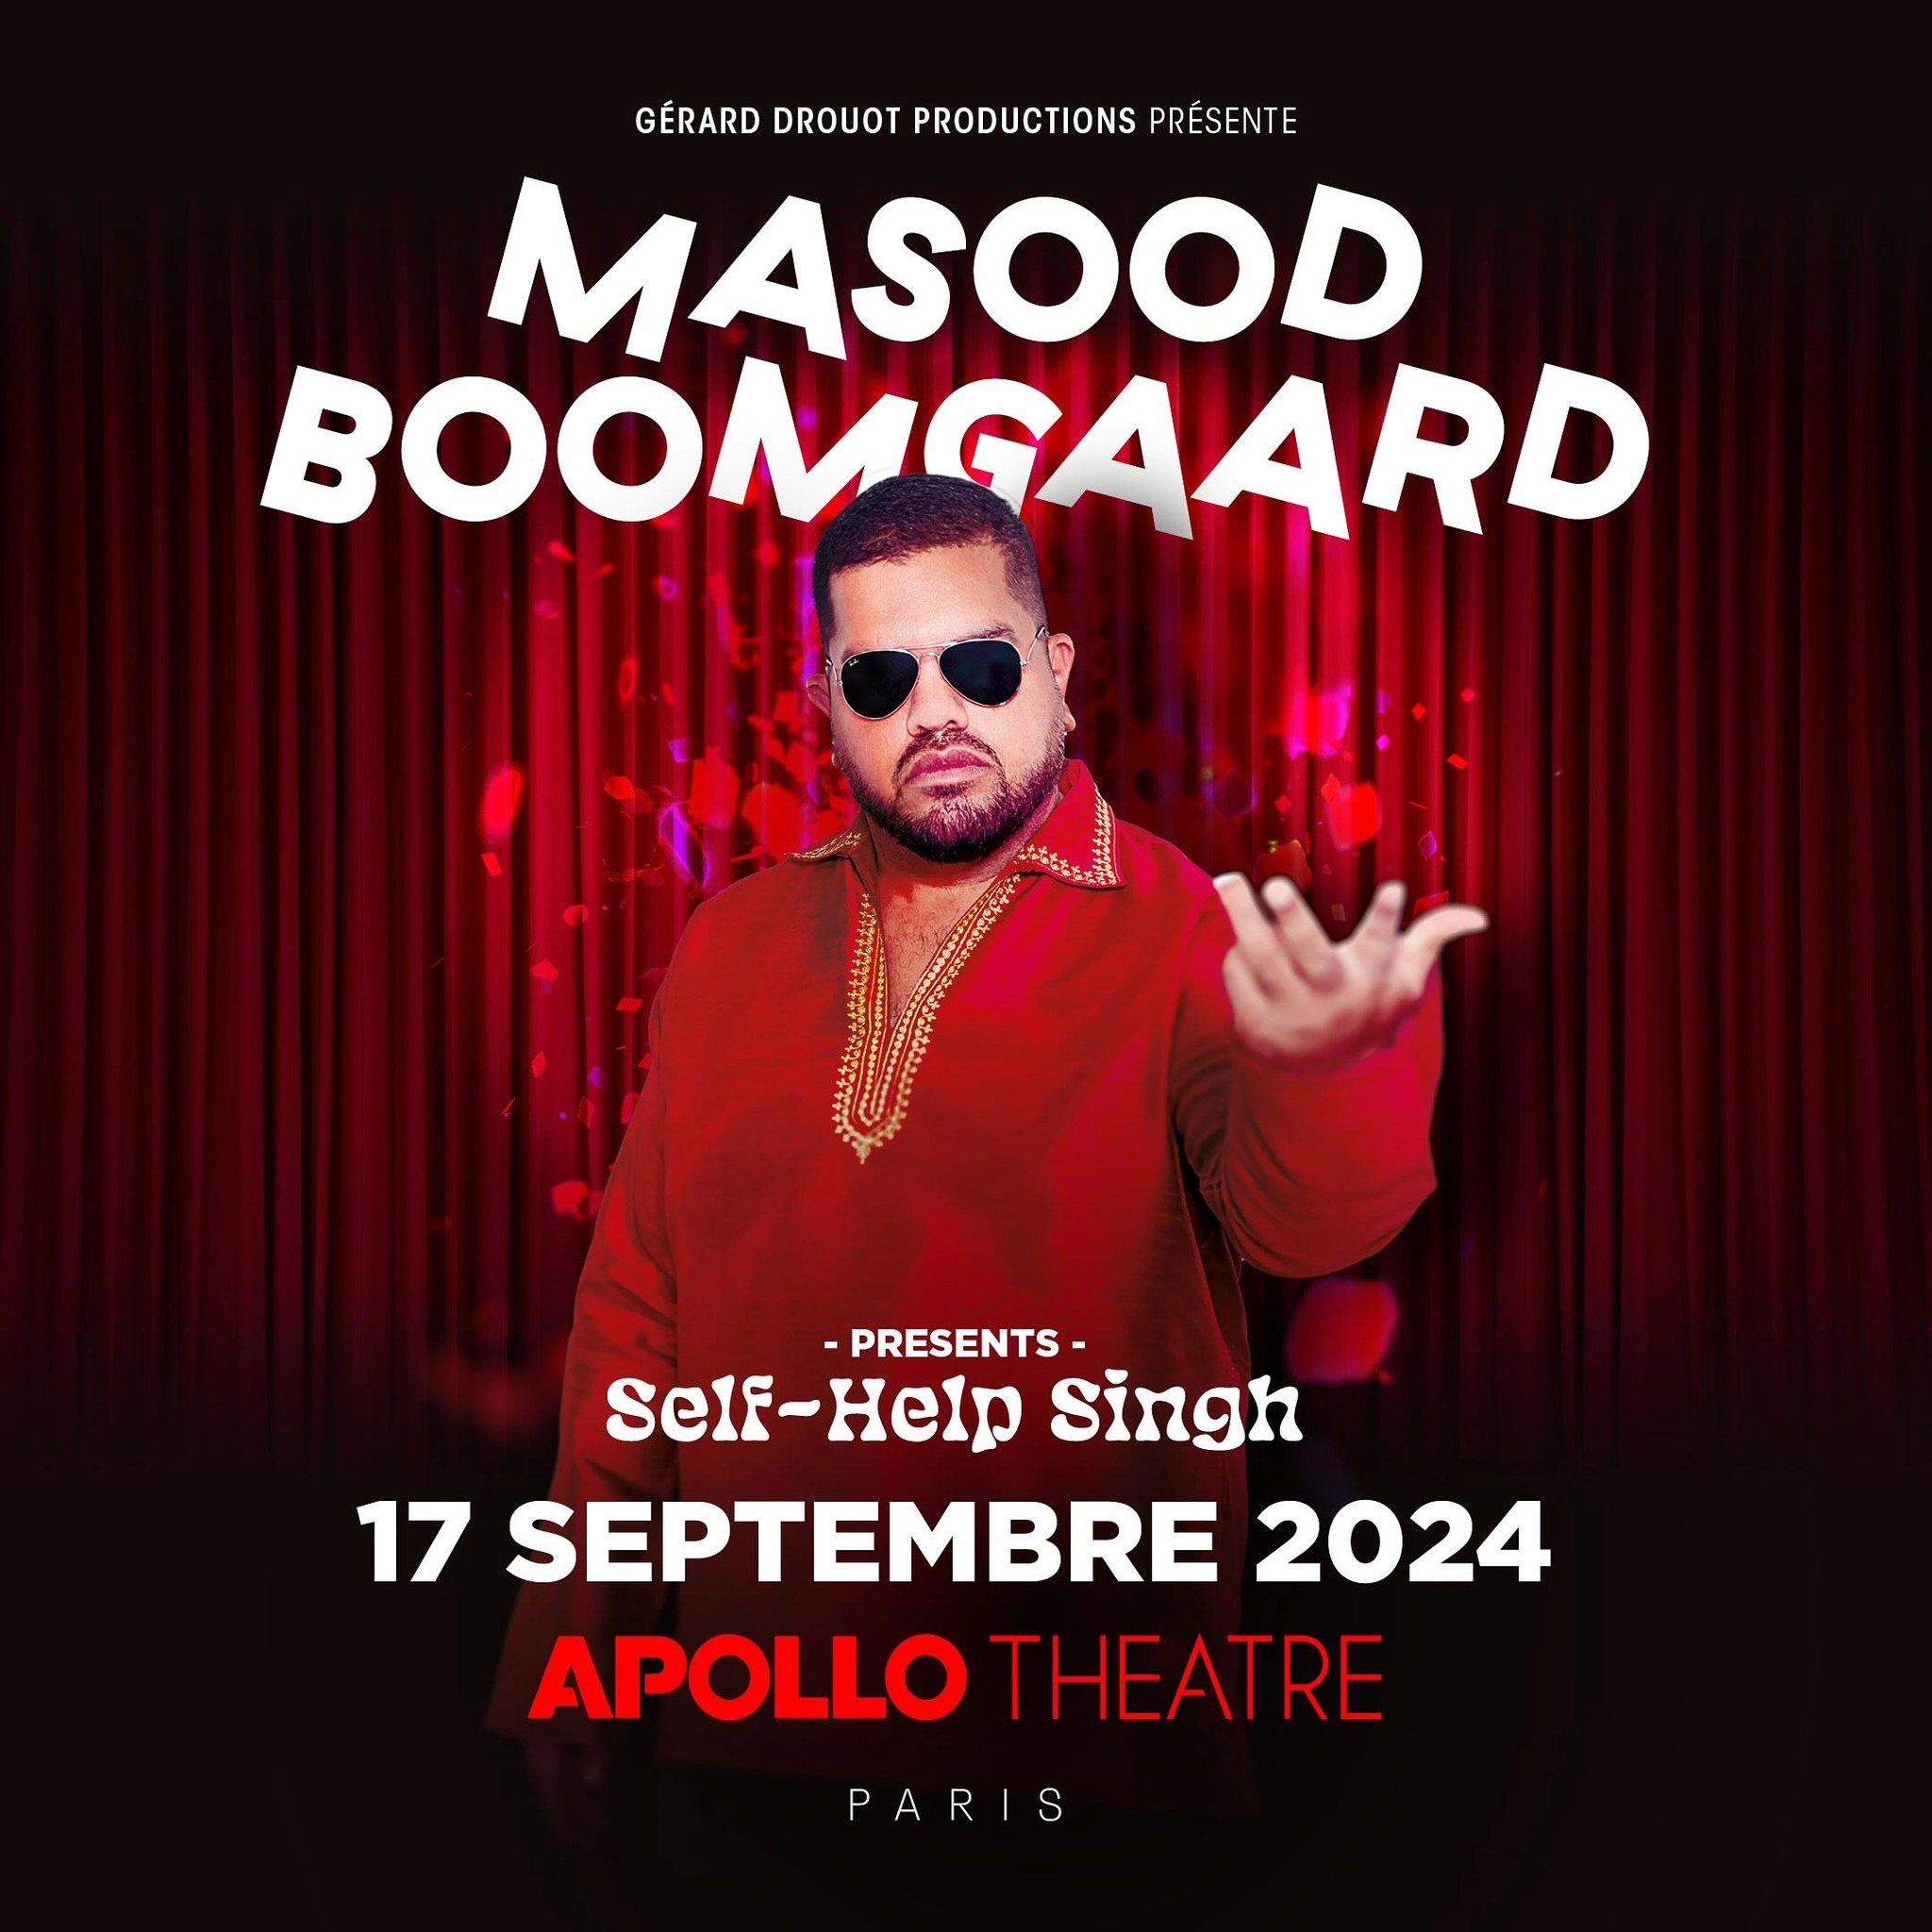 Billets Masood Boomgaard (Apollo Theatre - Paris)